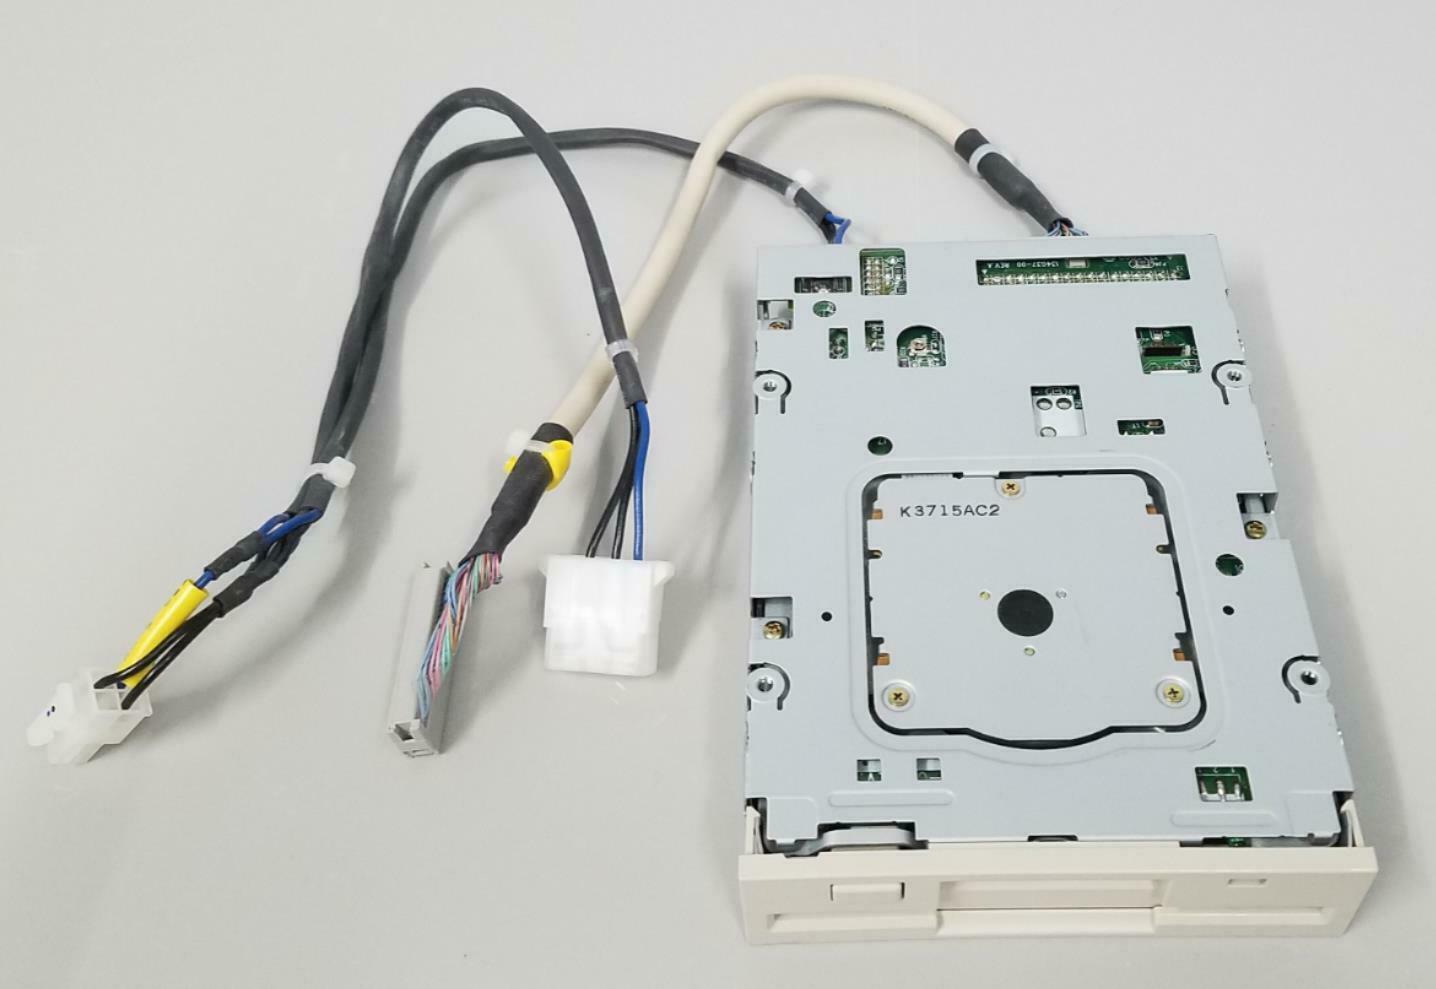 Siemens Ultrasound Sonoline Adara Hard Disk DIAGNOSTIC ULTRASOUND MACHINES FOR SALE